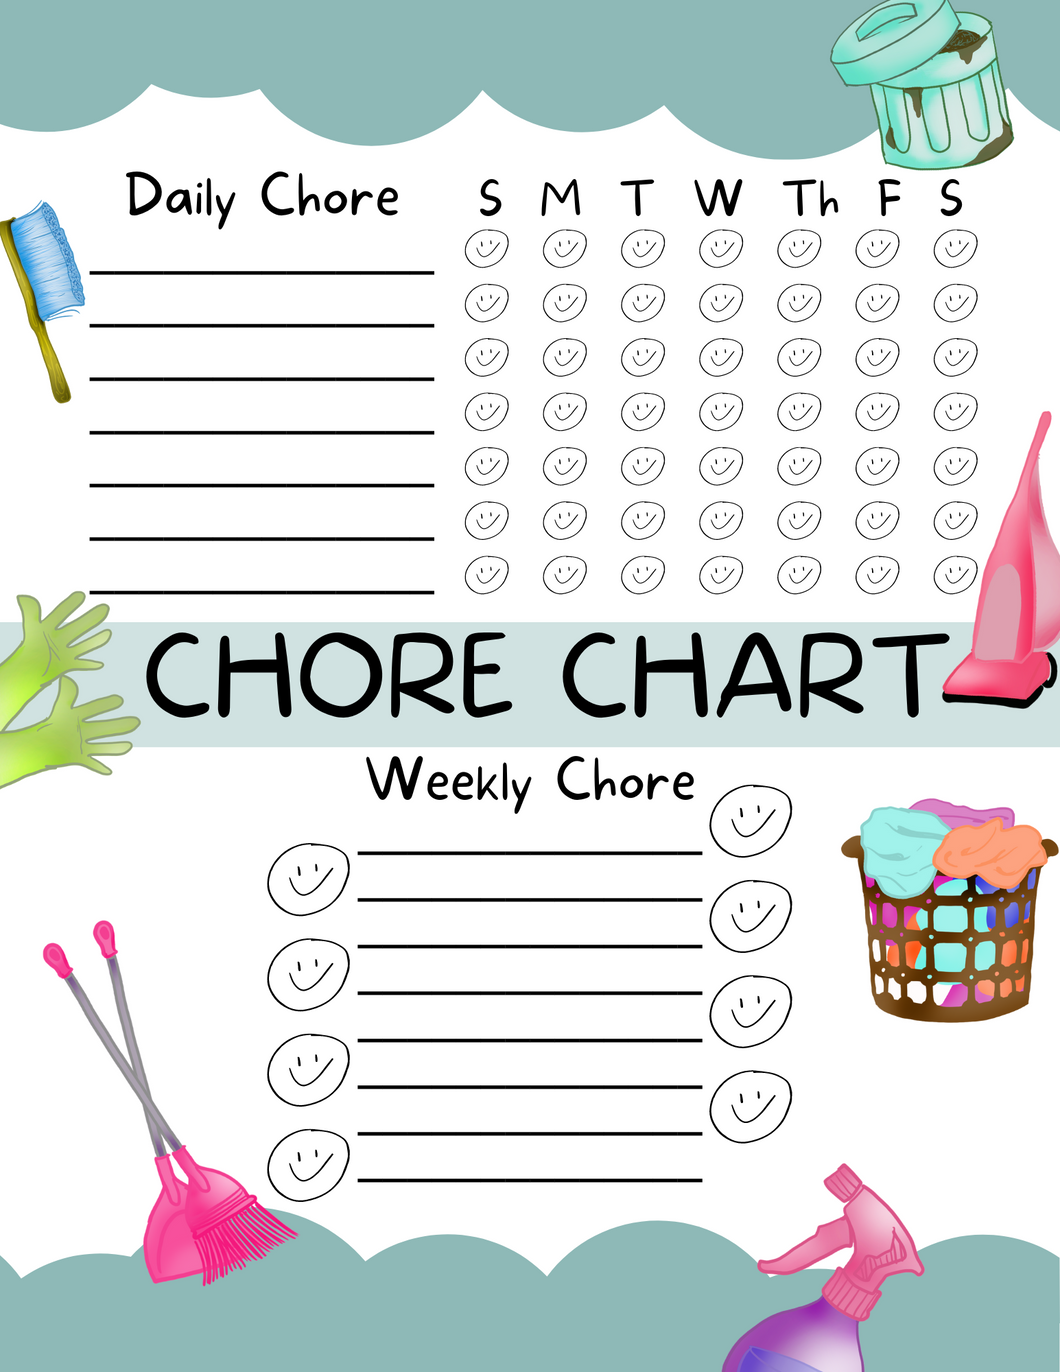 Daily and Weekly Chore Charts